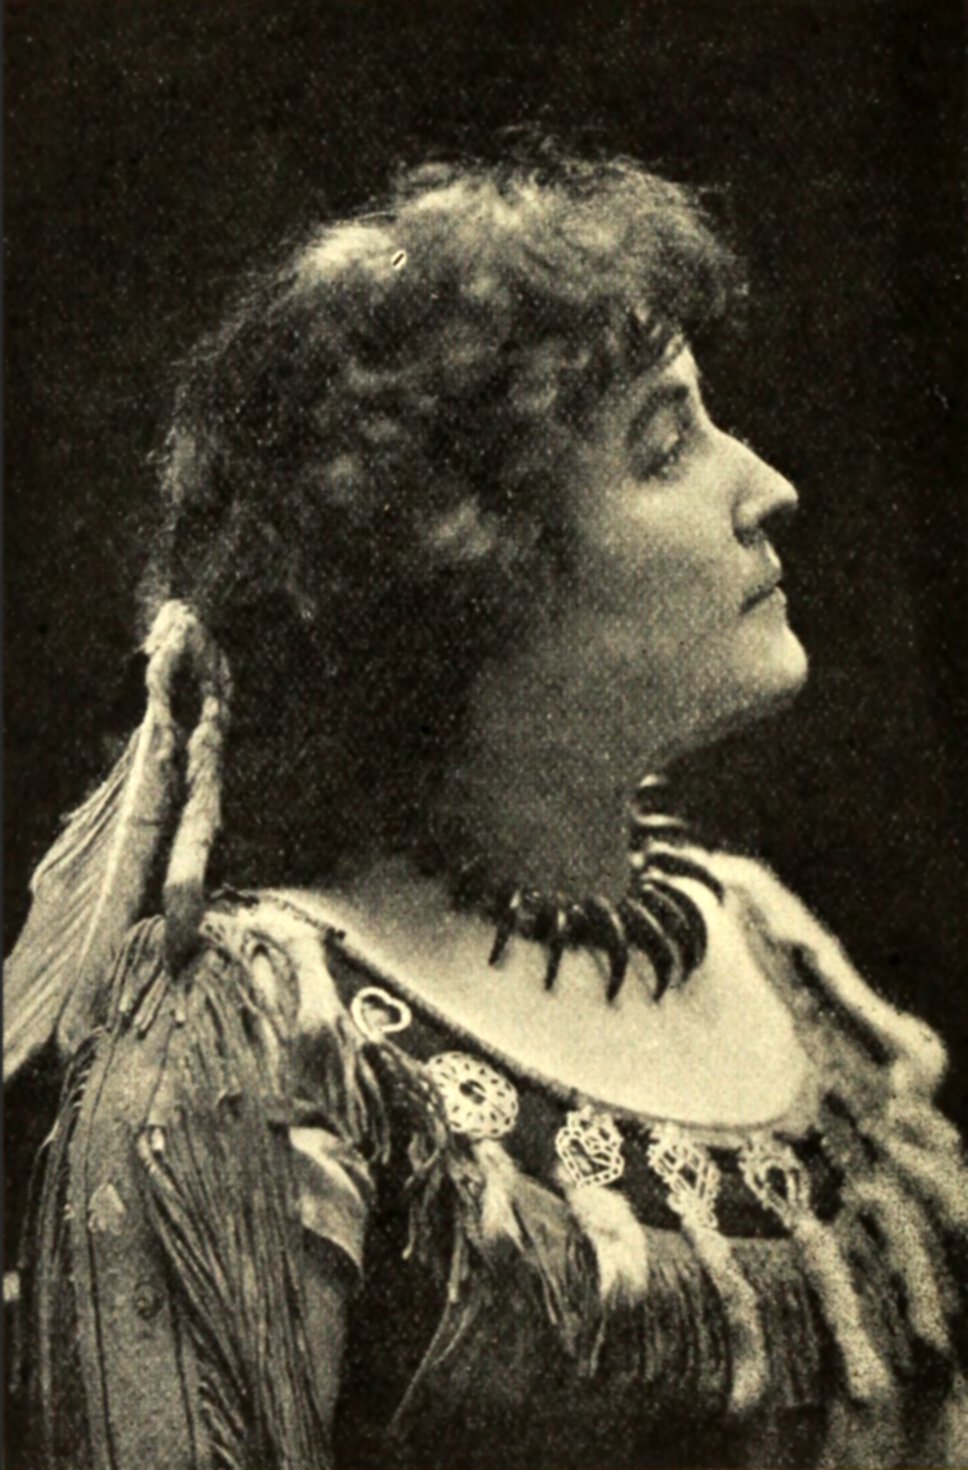 Head and shoulders portrait of E. Pauline Johnson, facing left.